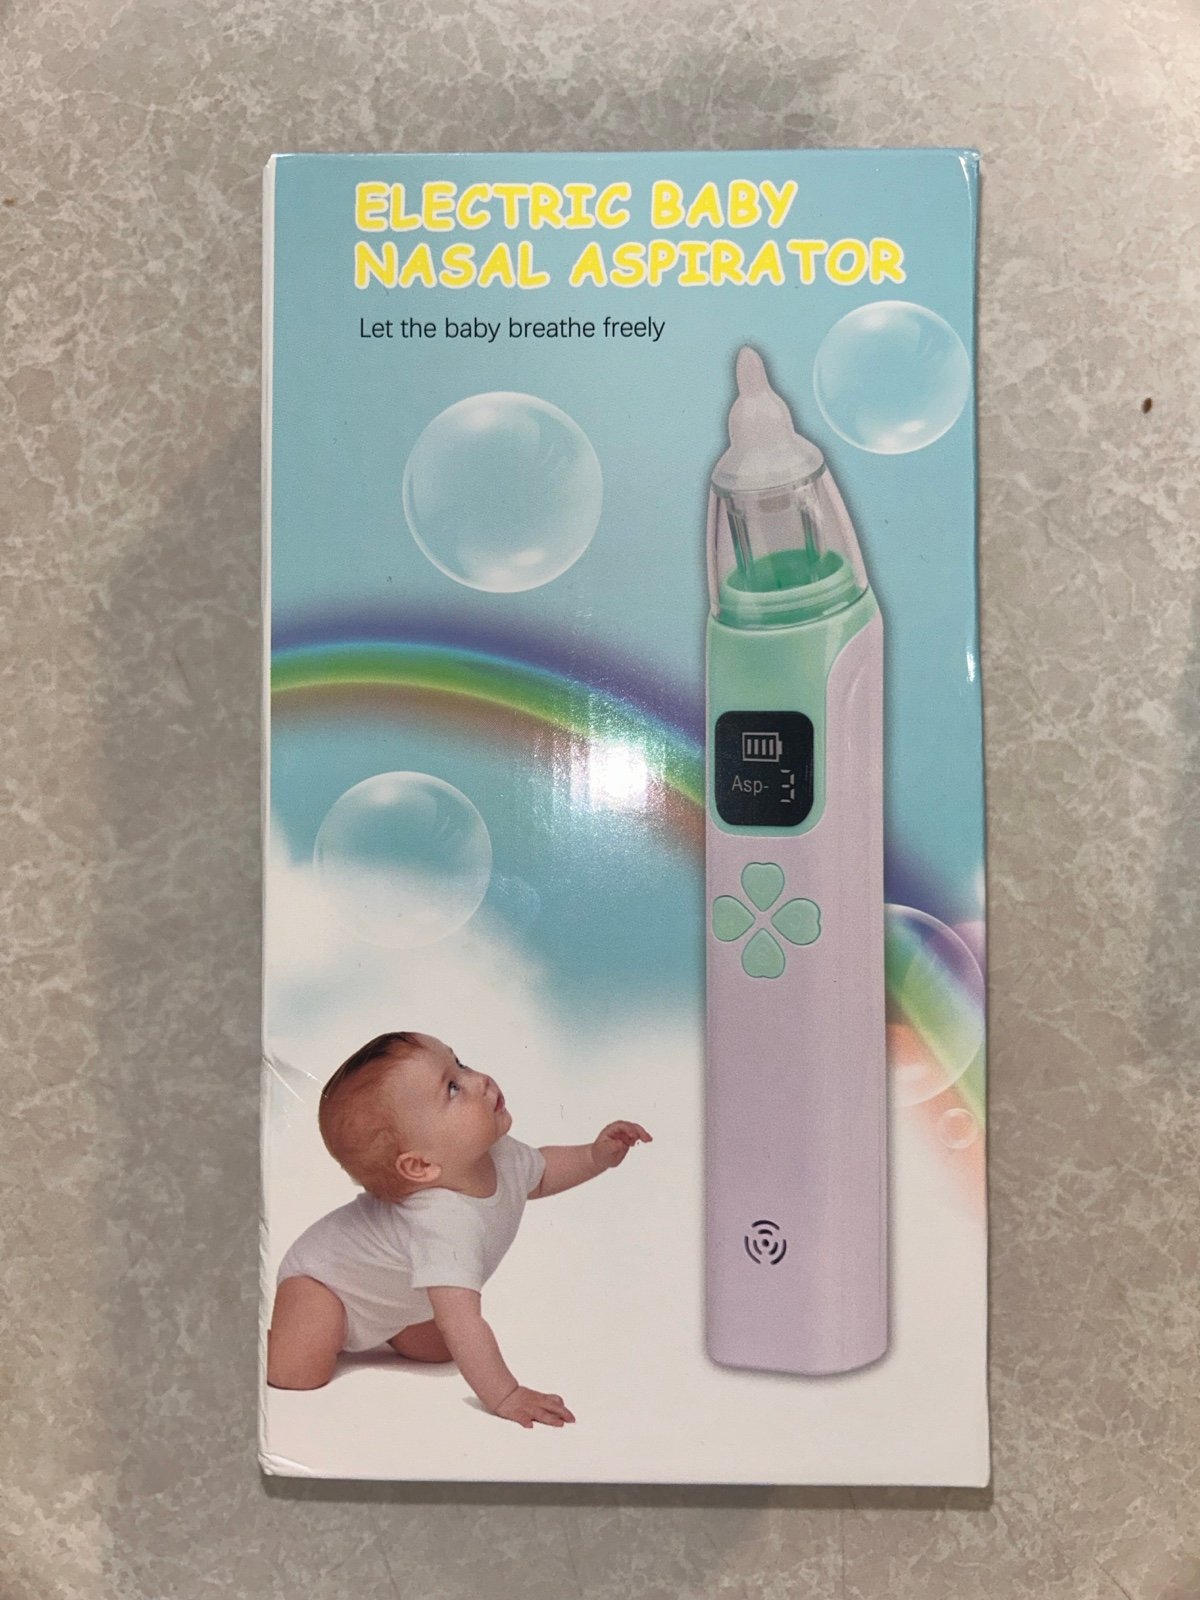 Electric Baby Nasal Aspirator 6G5QK9a6b